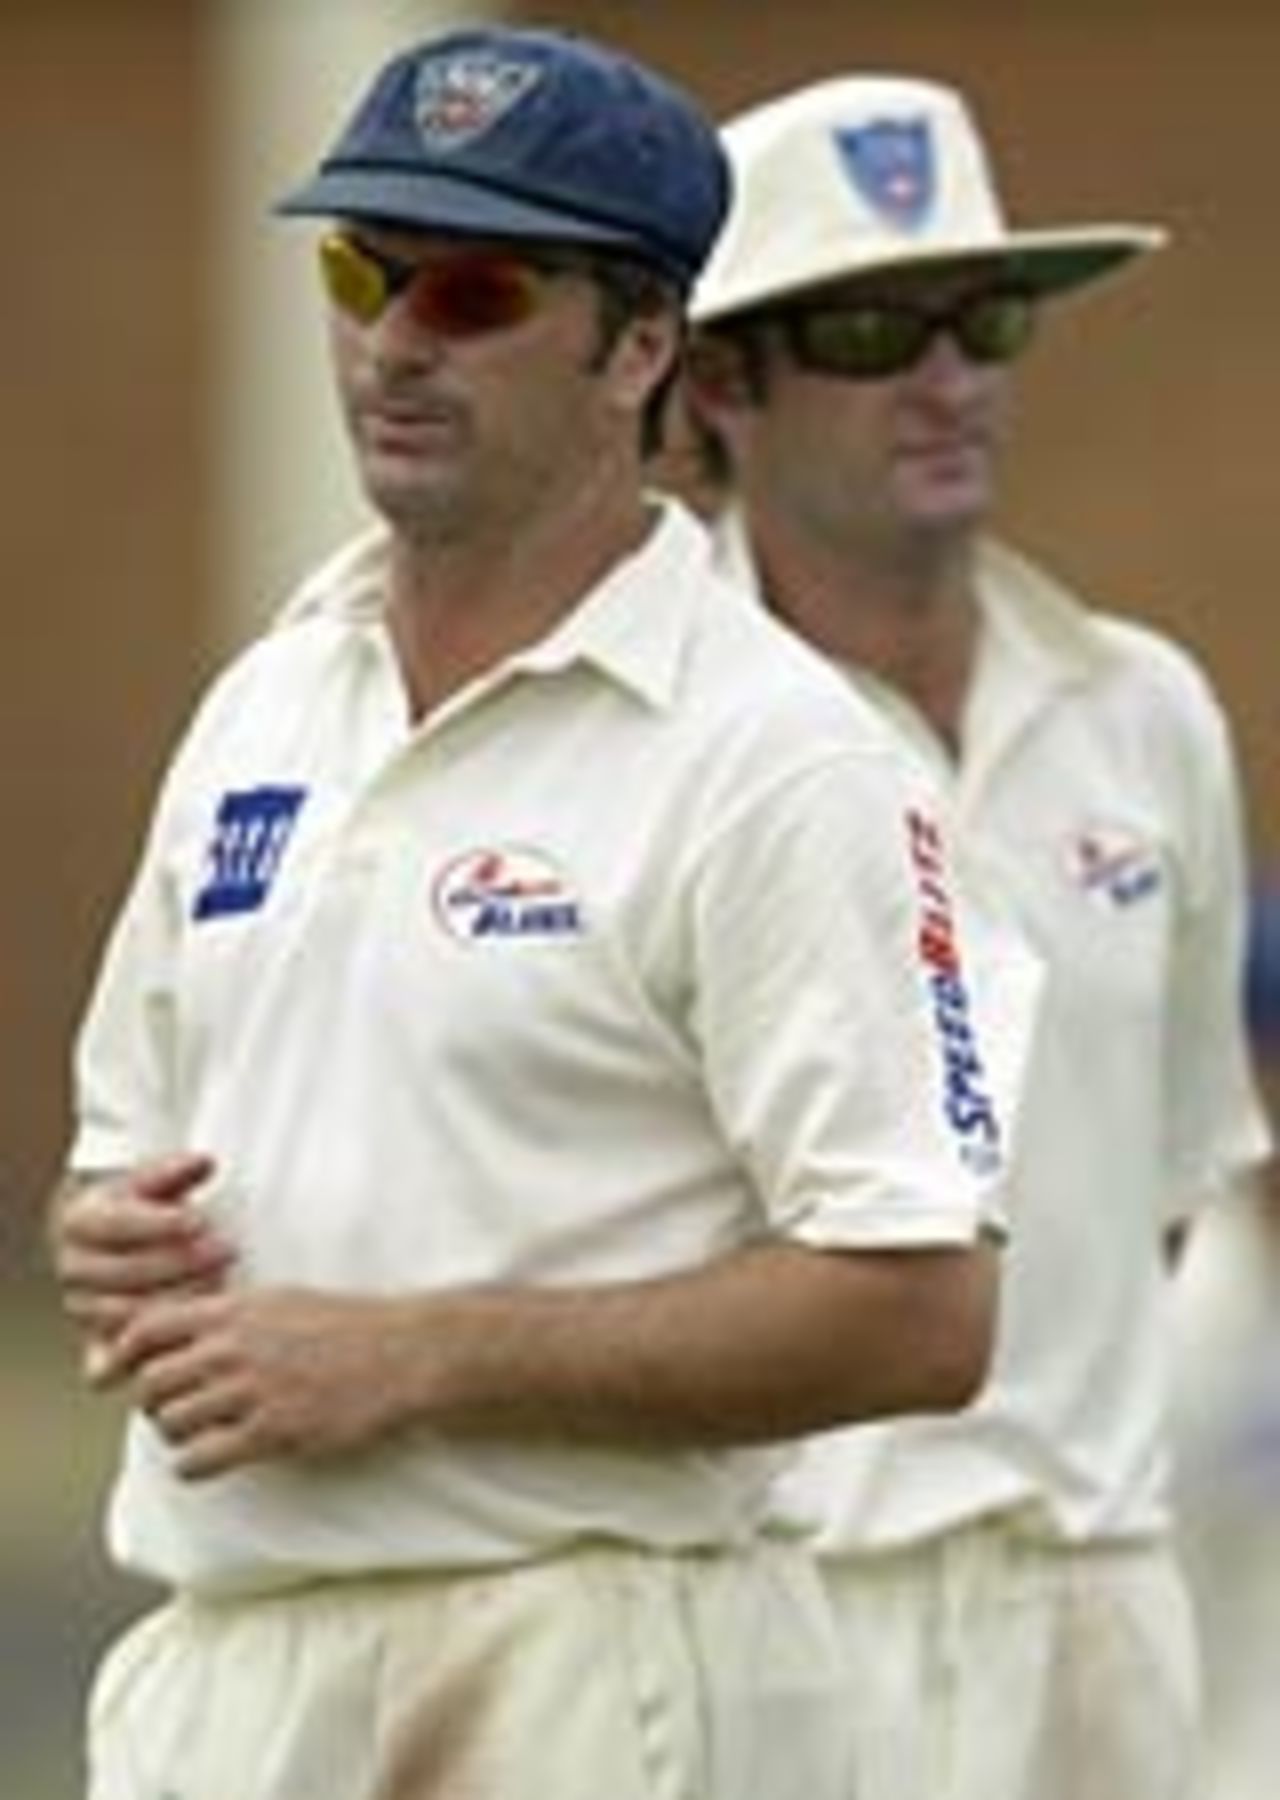 Steve and Mark Waugh, 2004